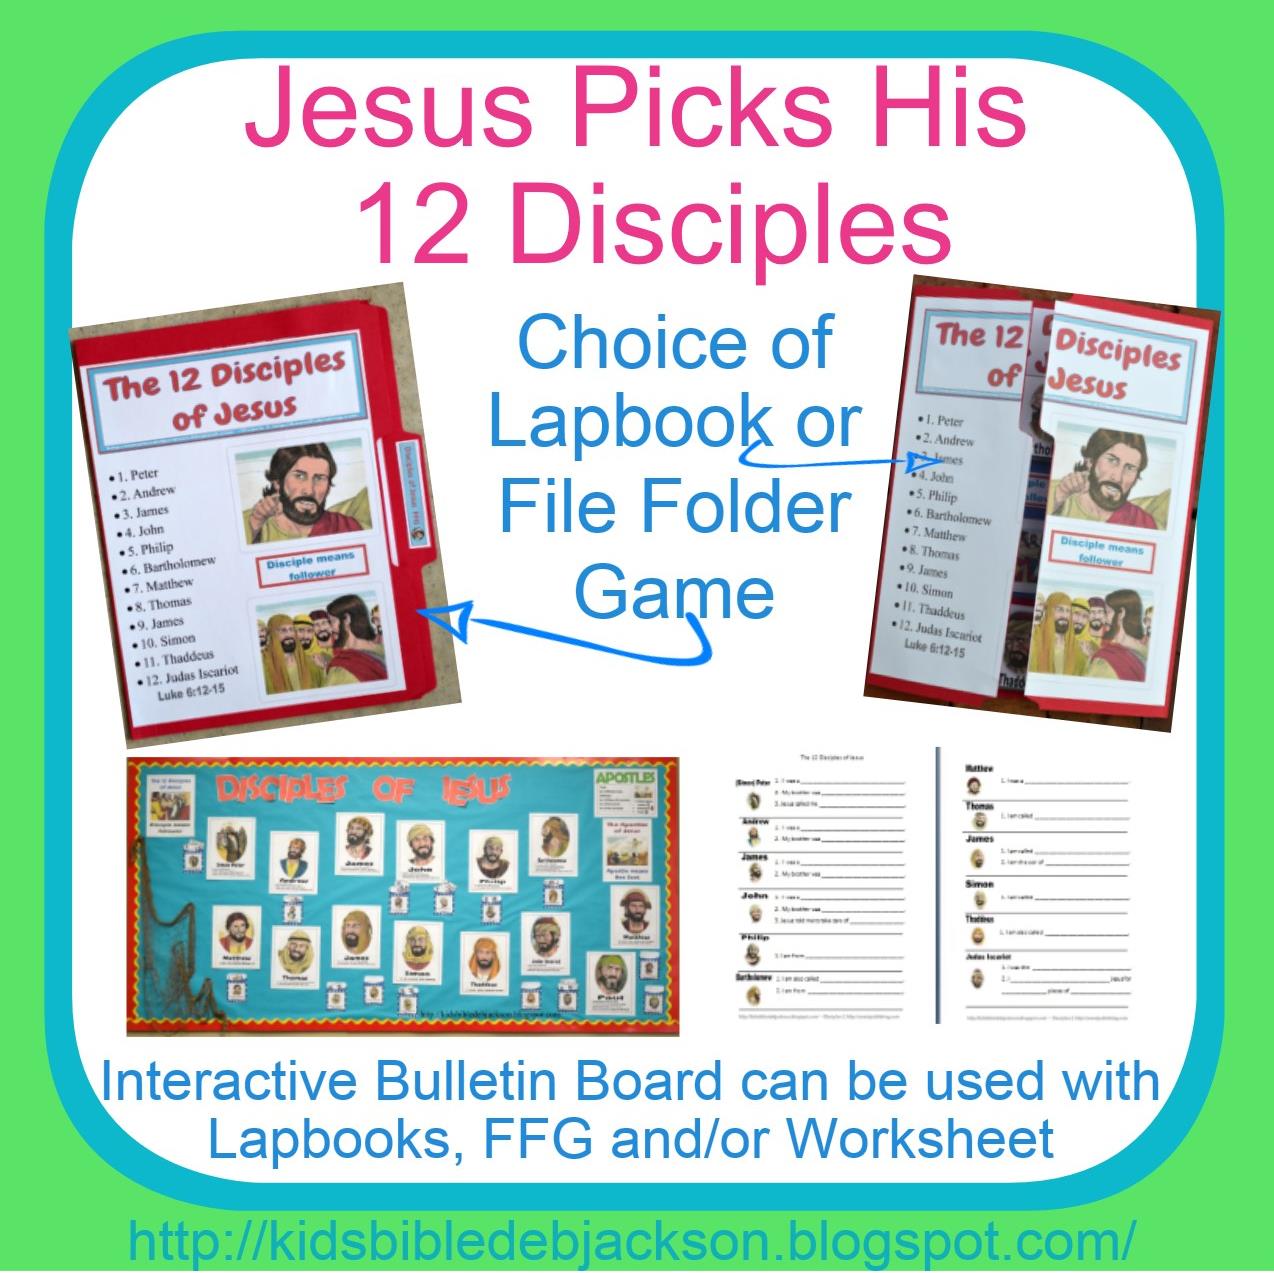 http://kidsbibledebjackson.blogspot.com/2014/07/jesus-picks-his-disciples.html